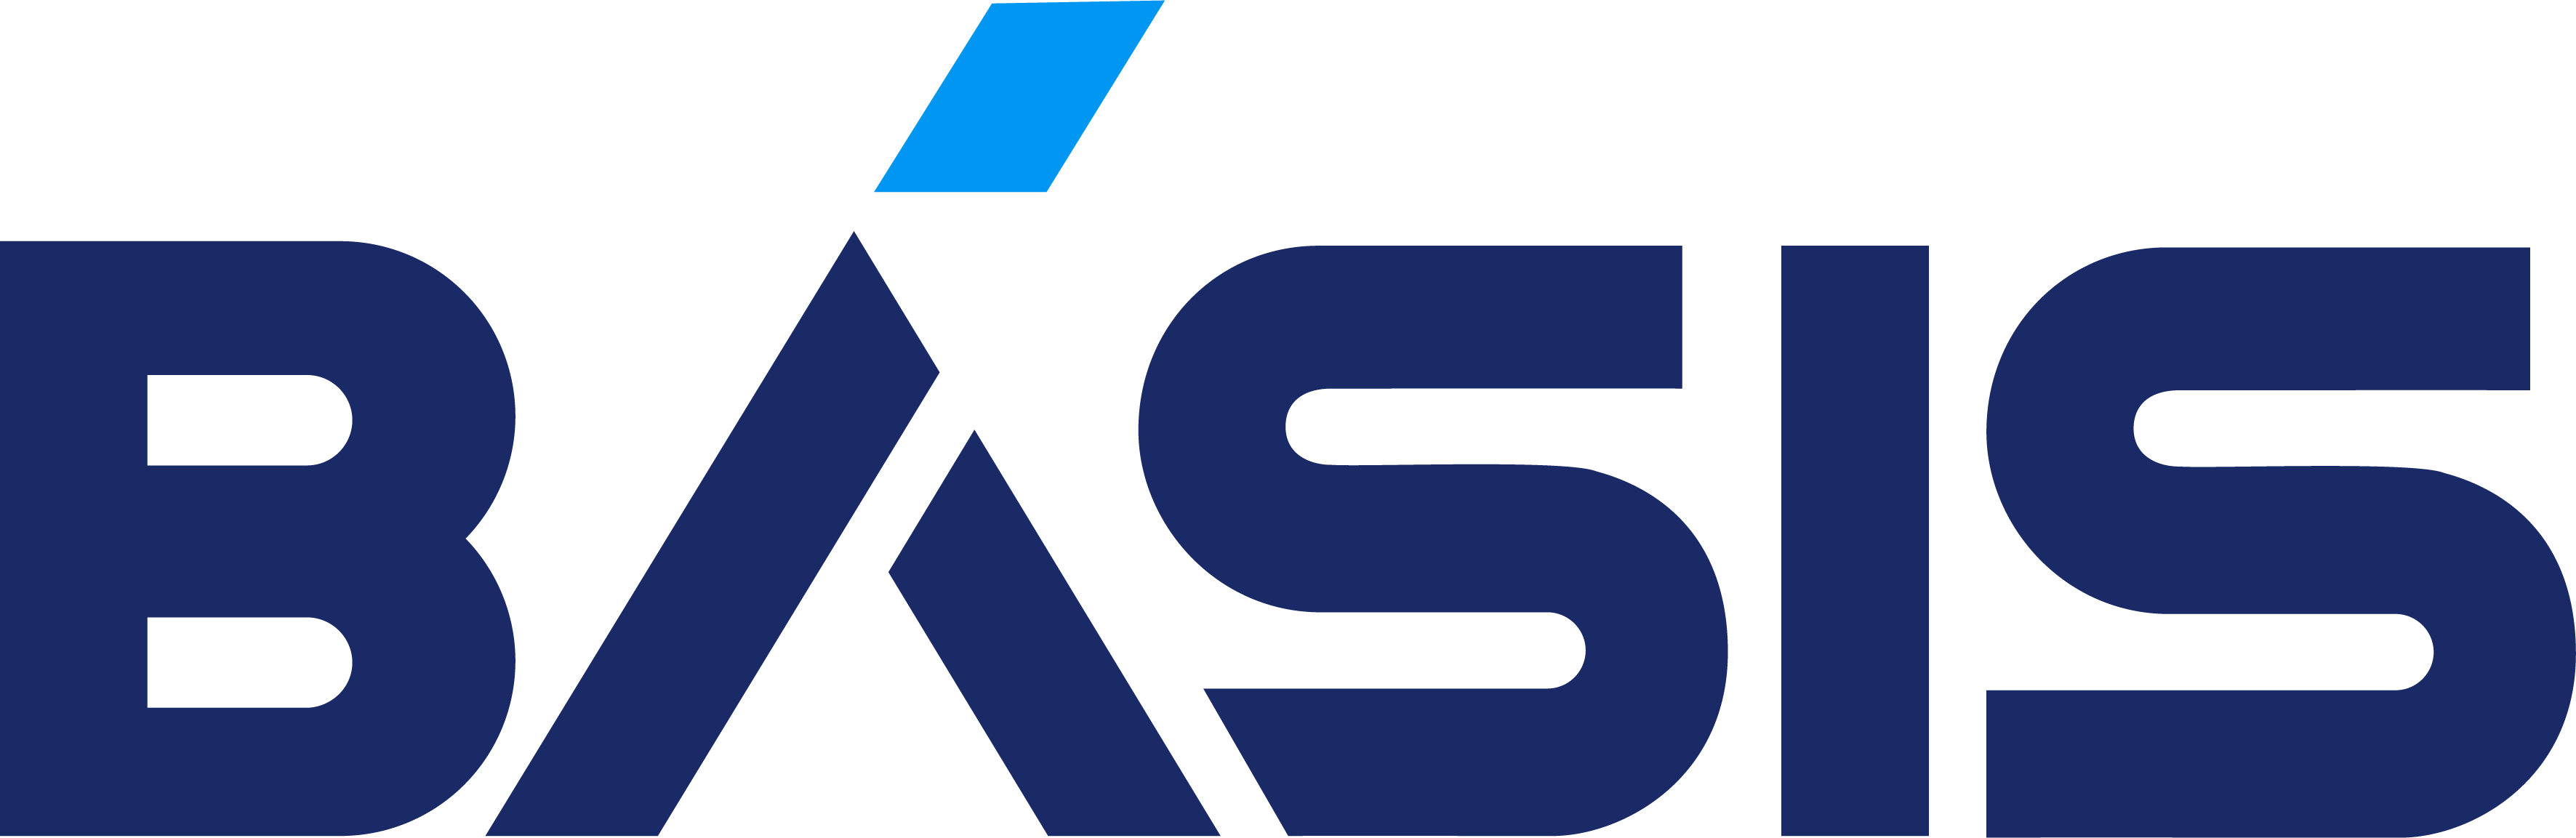 Логотип Базис